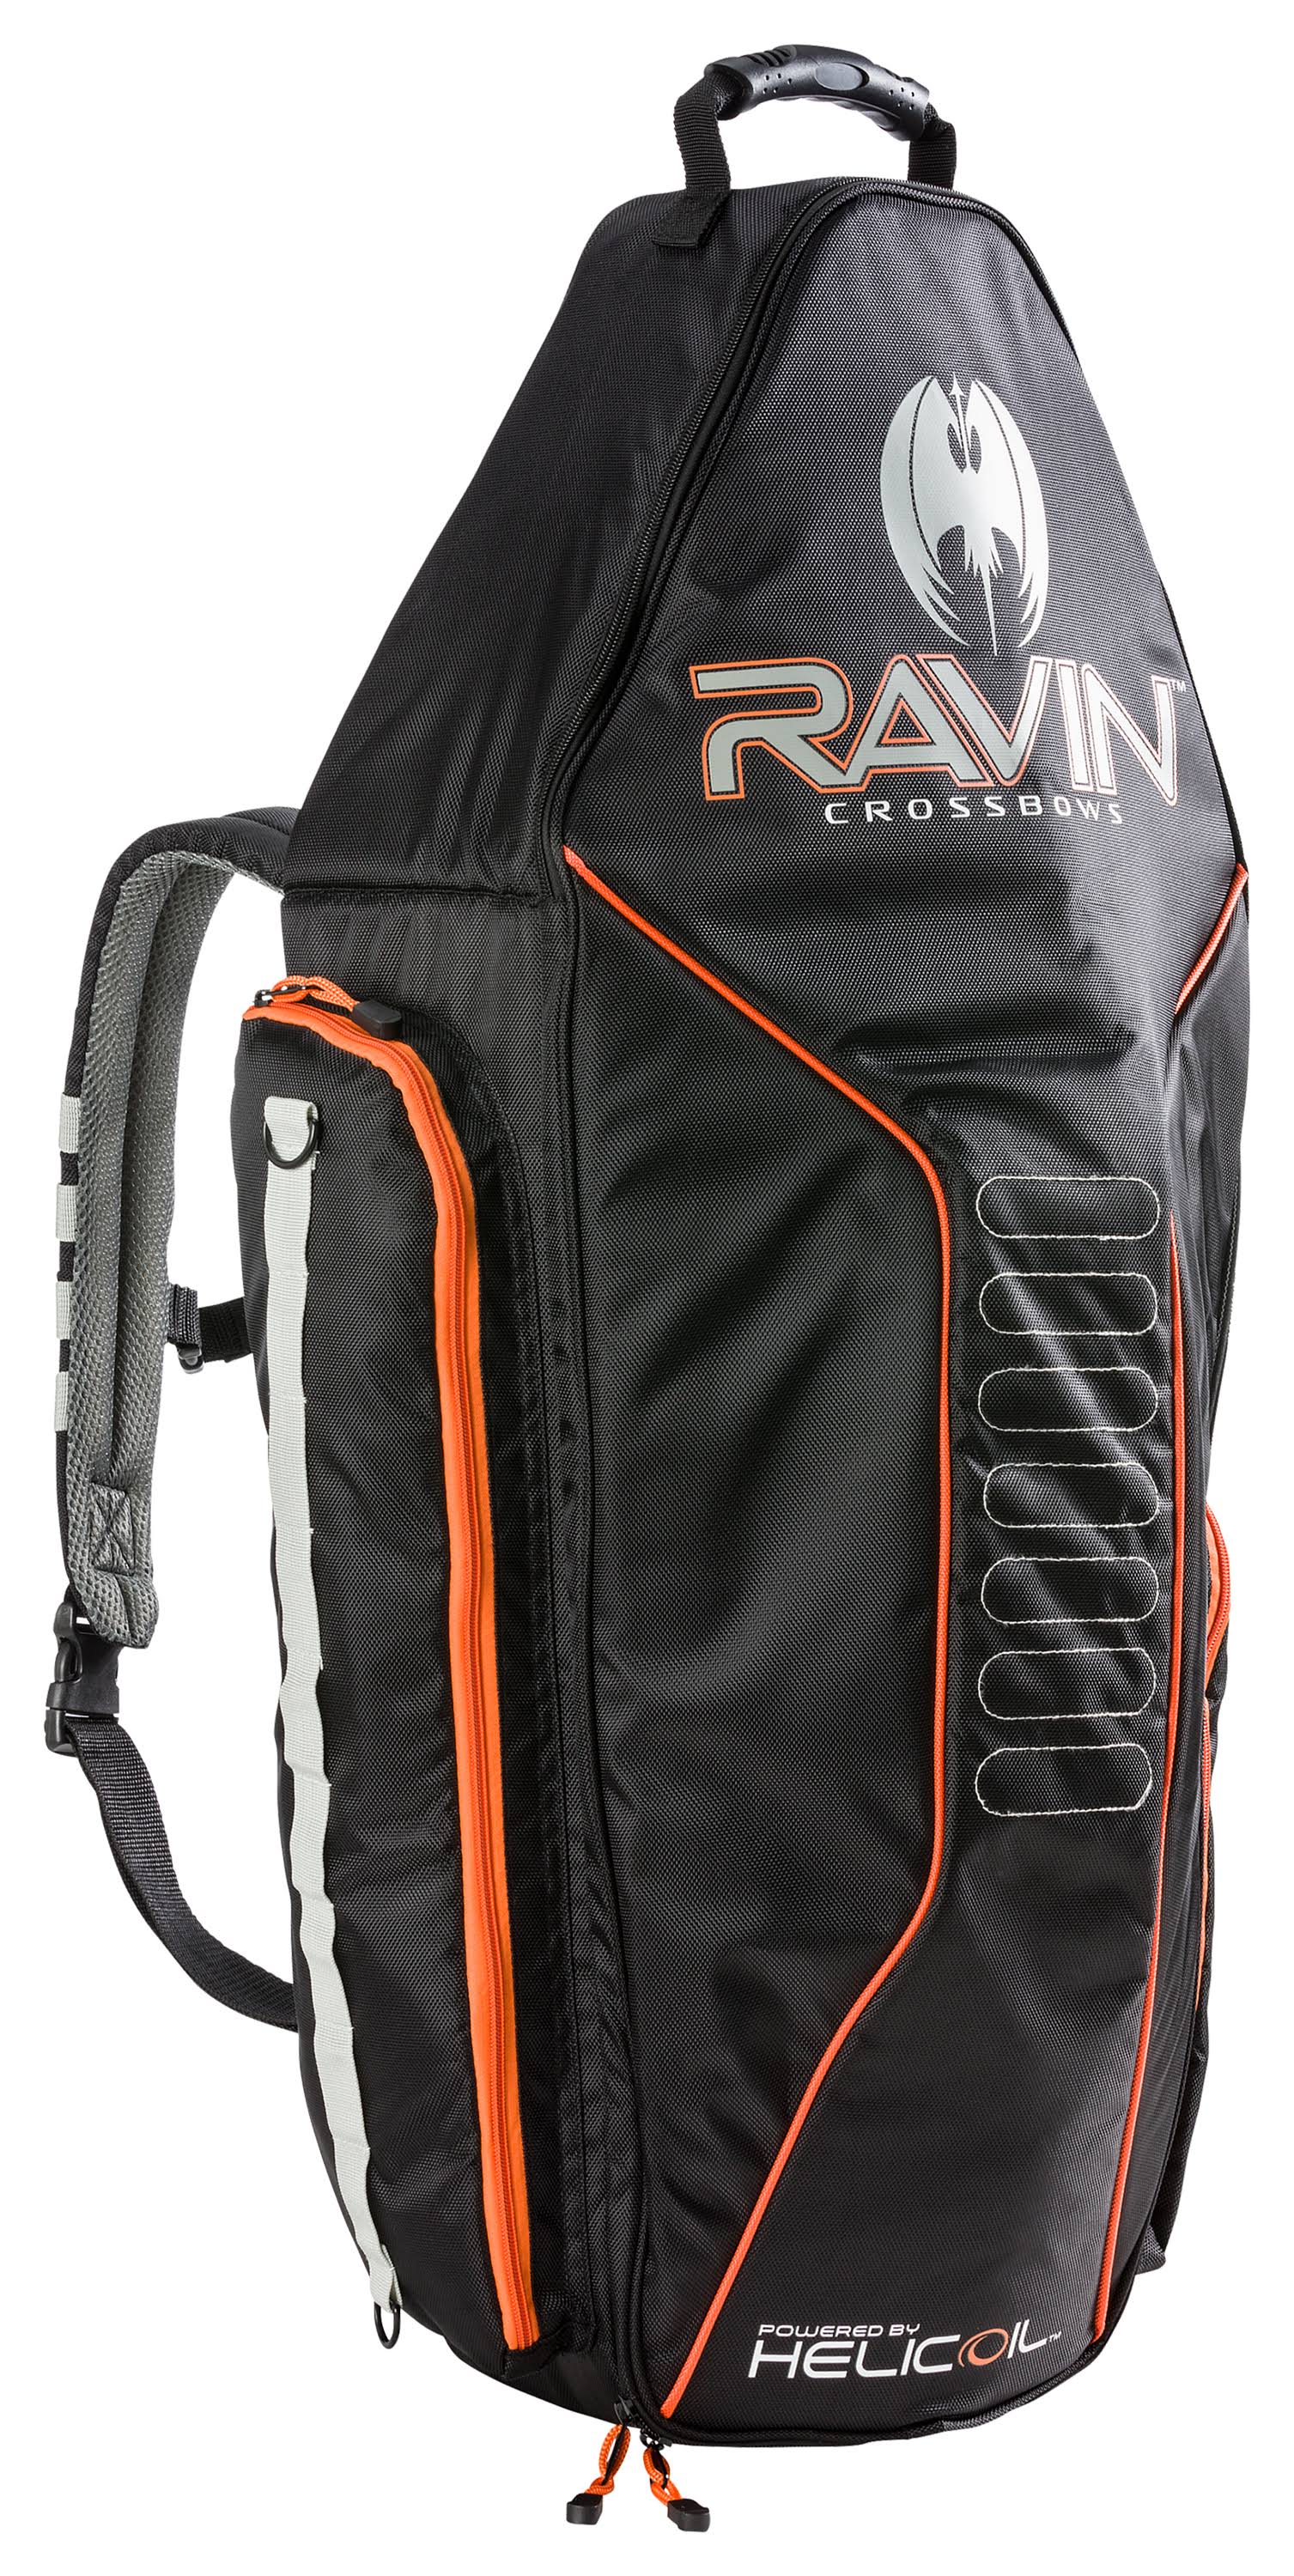 Ravin R180 Crossbows Soft Case - 35"